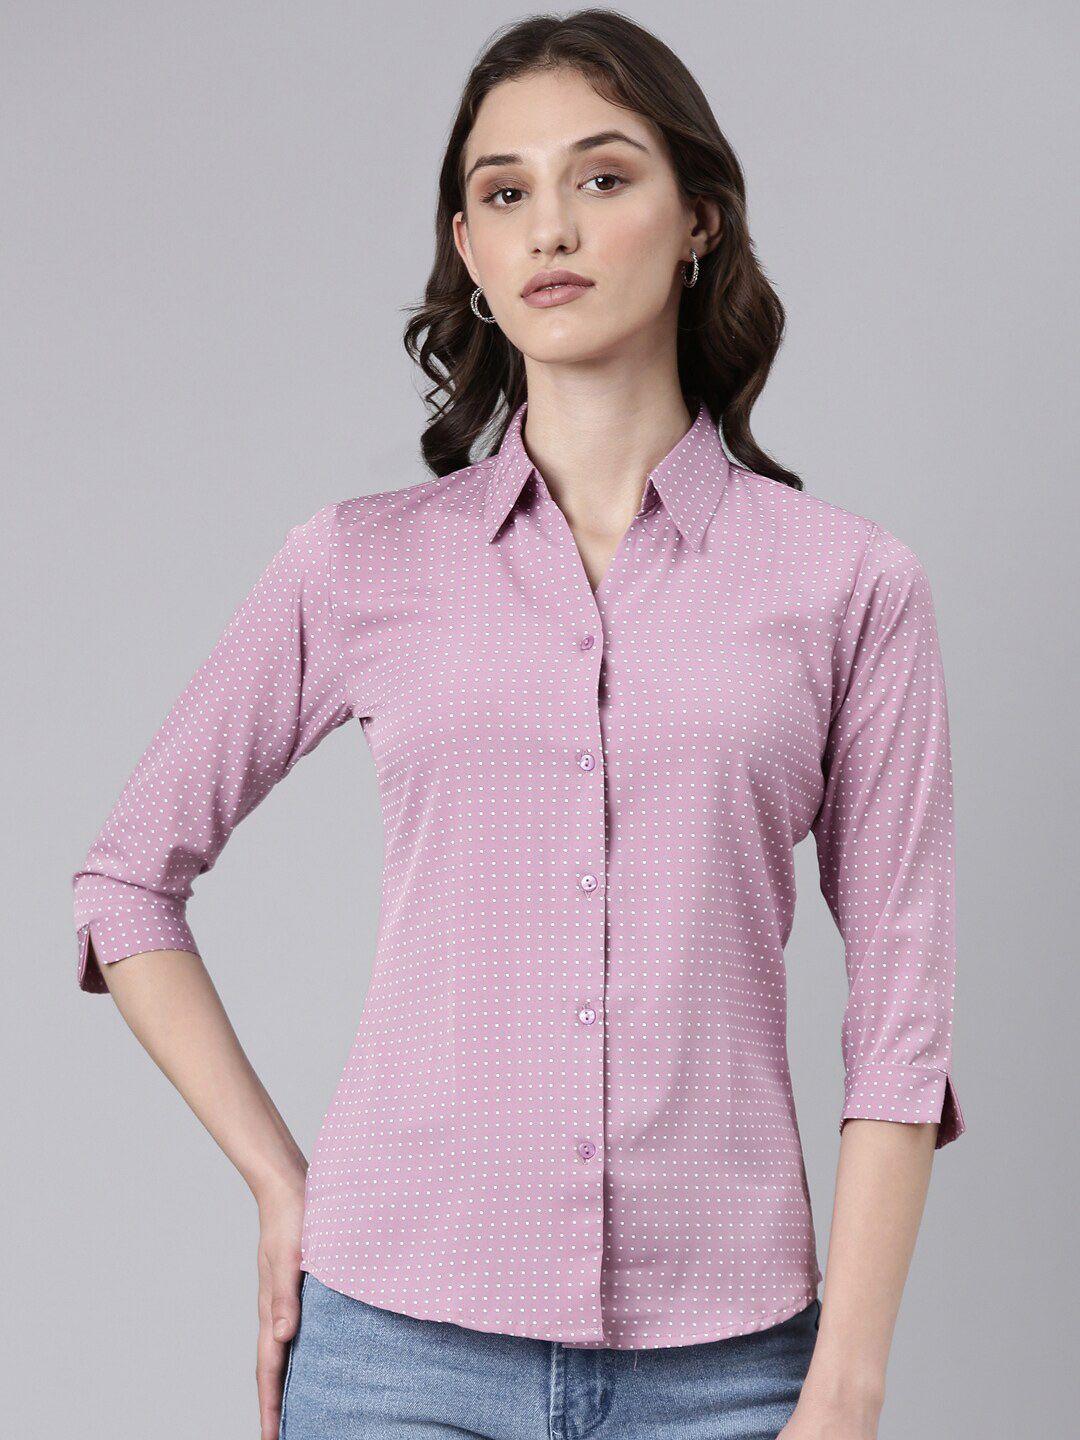 showoff polka dot printed slim fit opaque cotton casual shirt